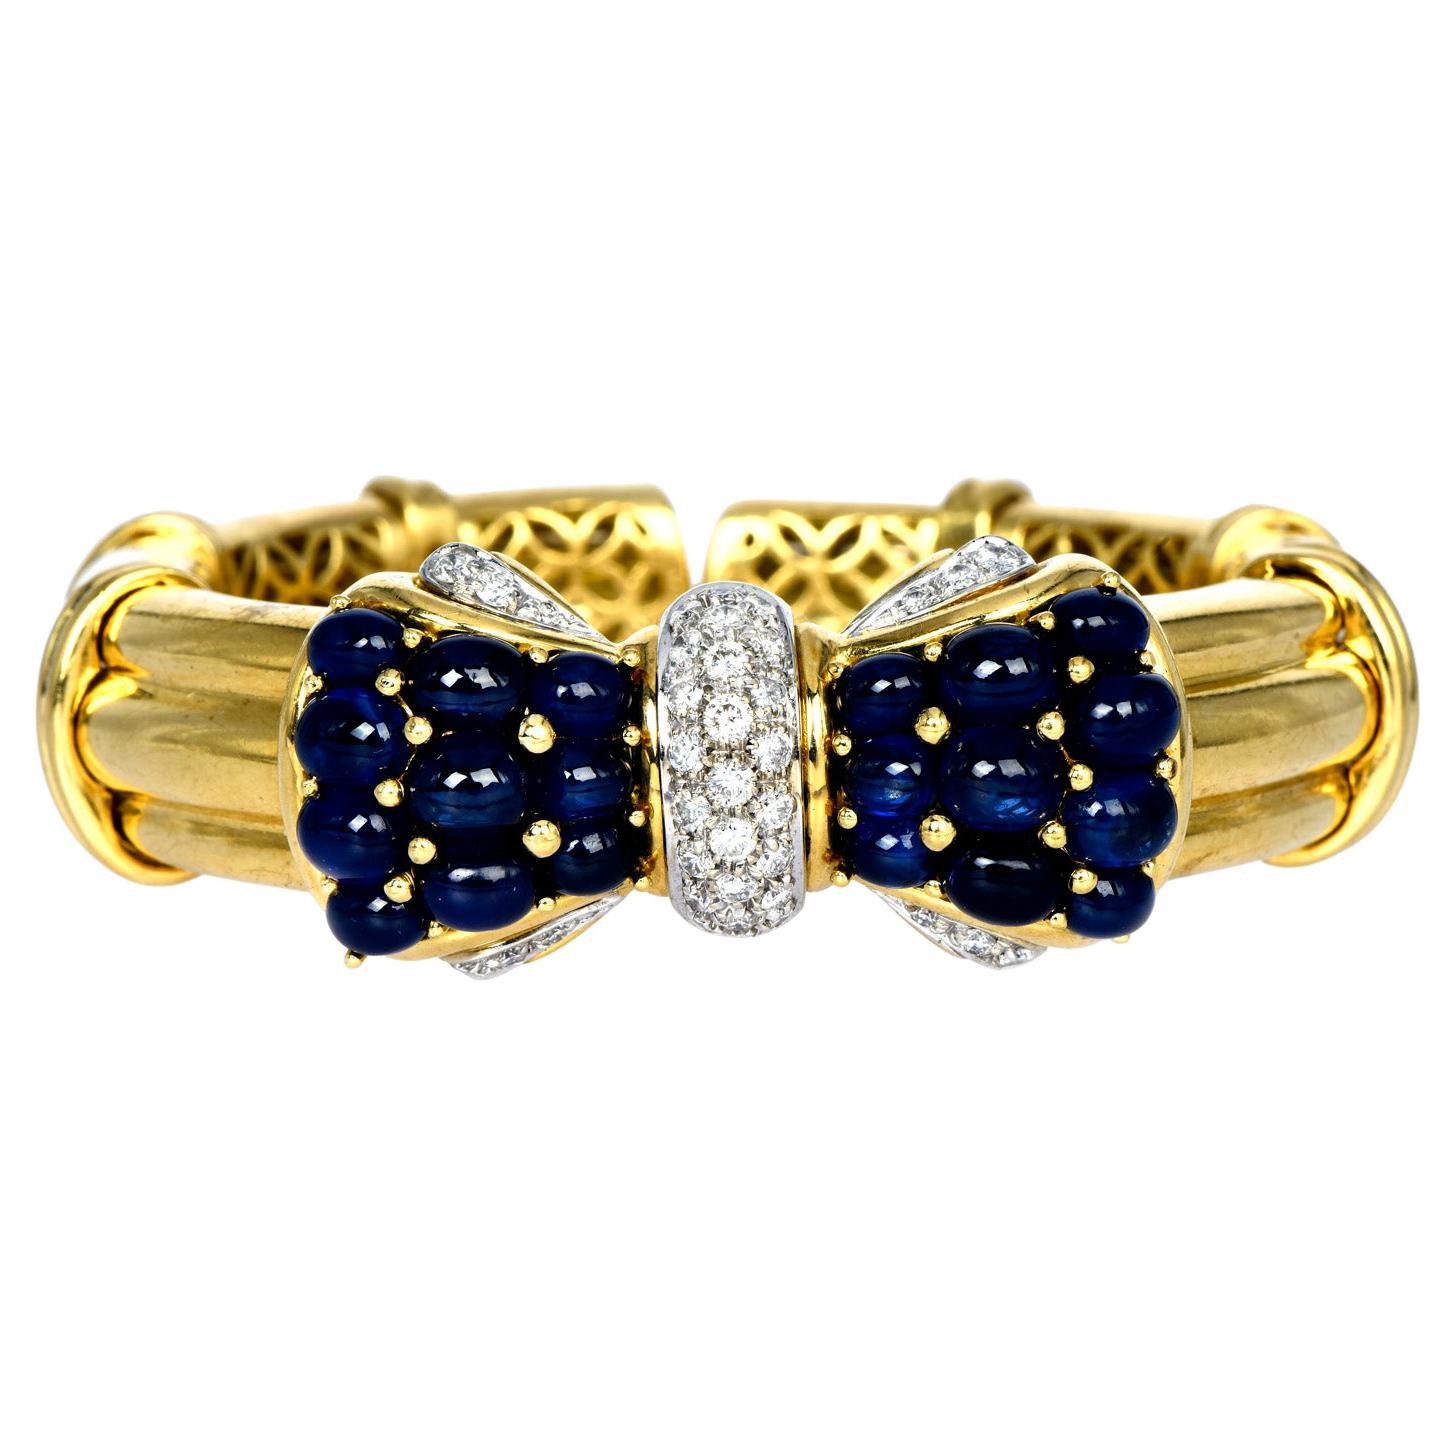 1980's Cabochon Blauer Saphir Diamant 18K Gold Schleife Armspange Armspange Armband